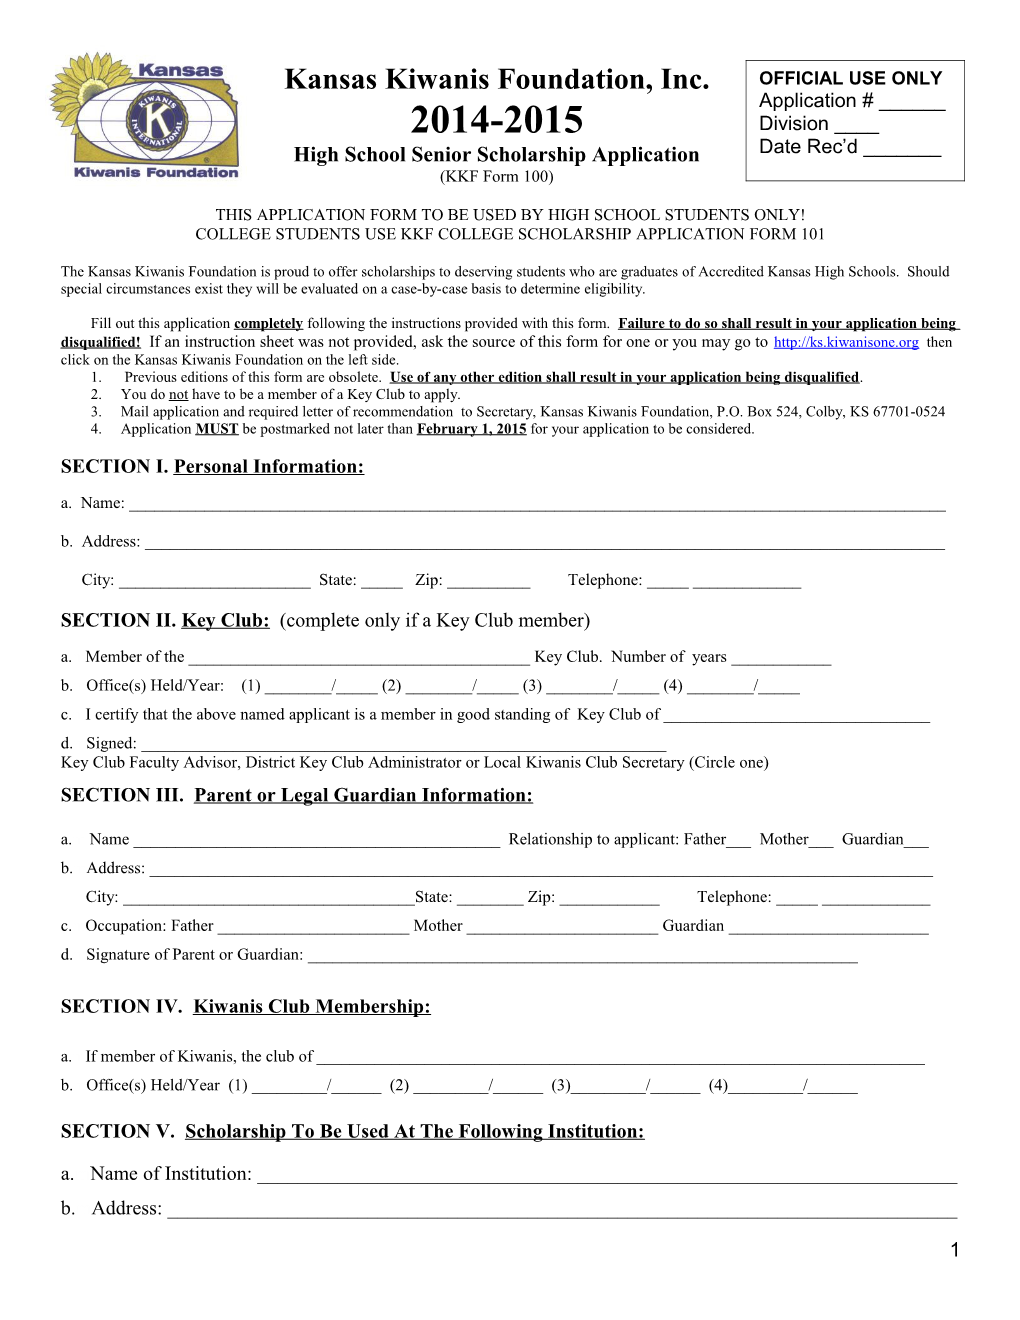 High School Senior Scholarship Application